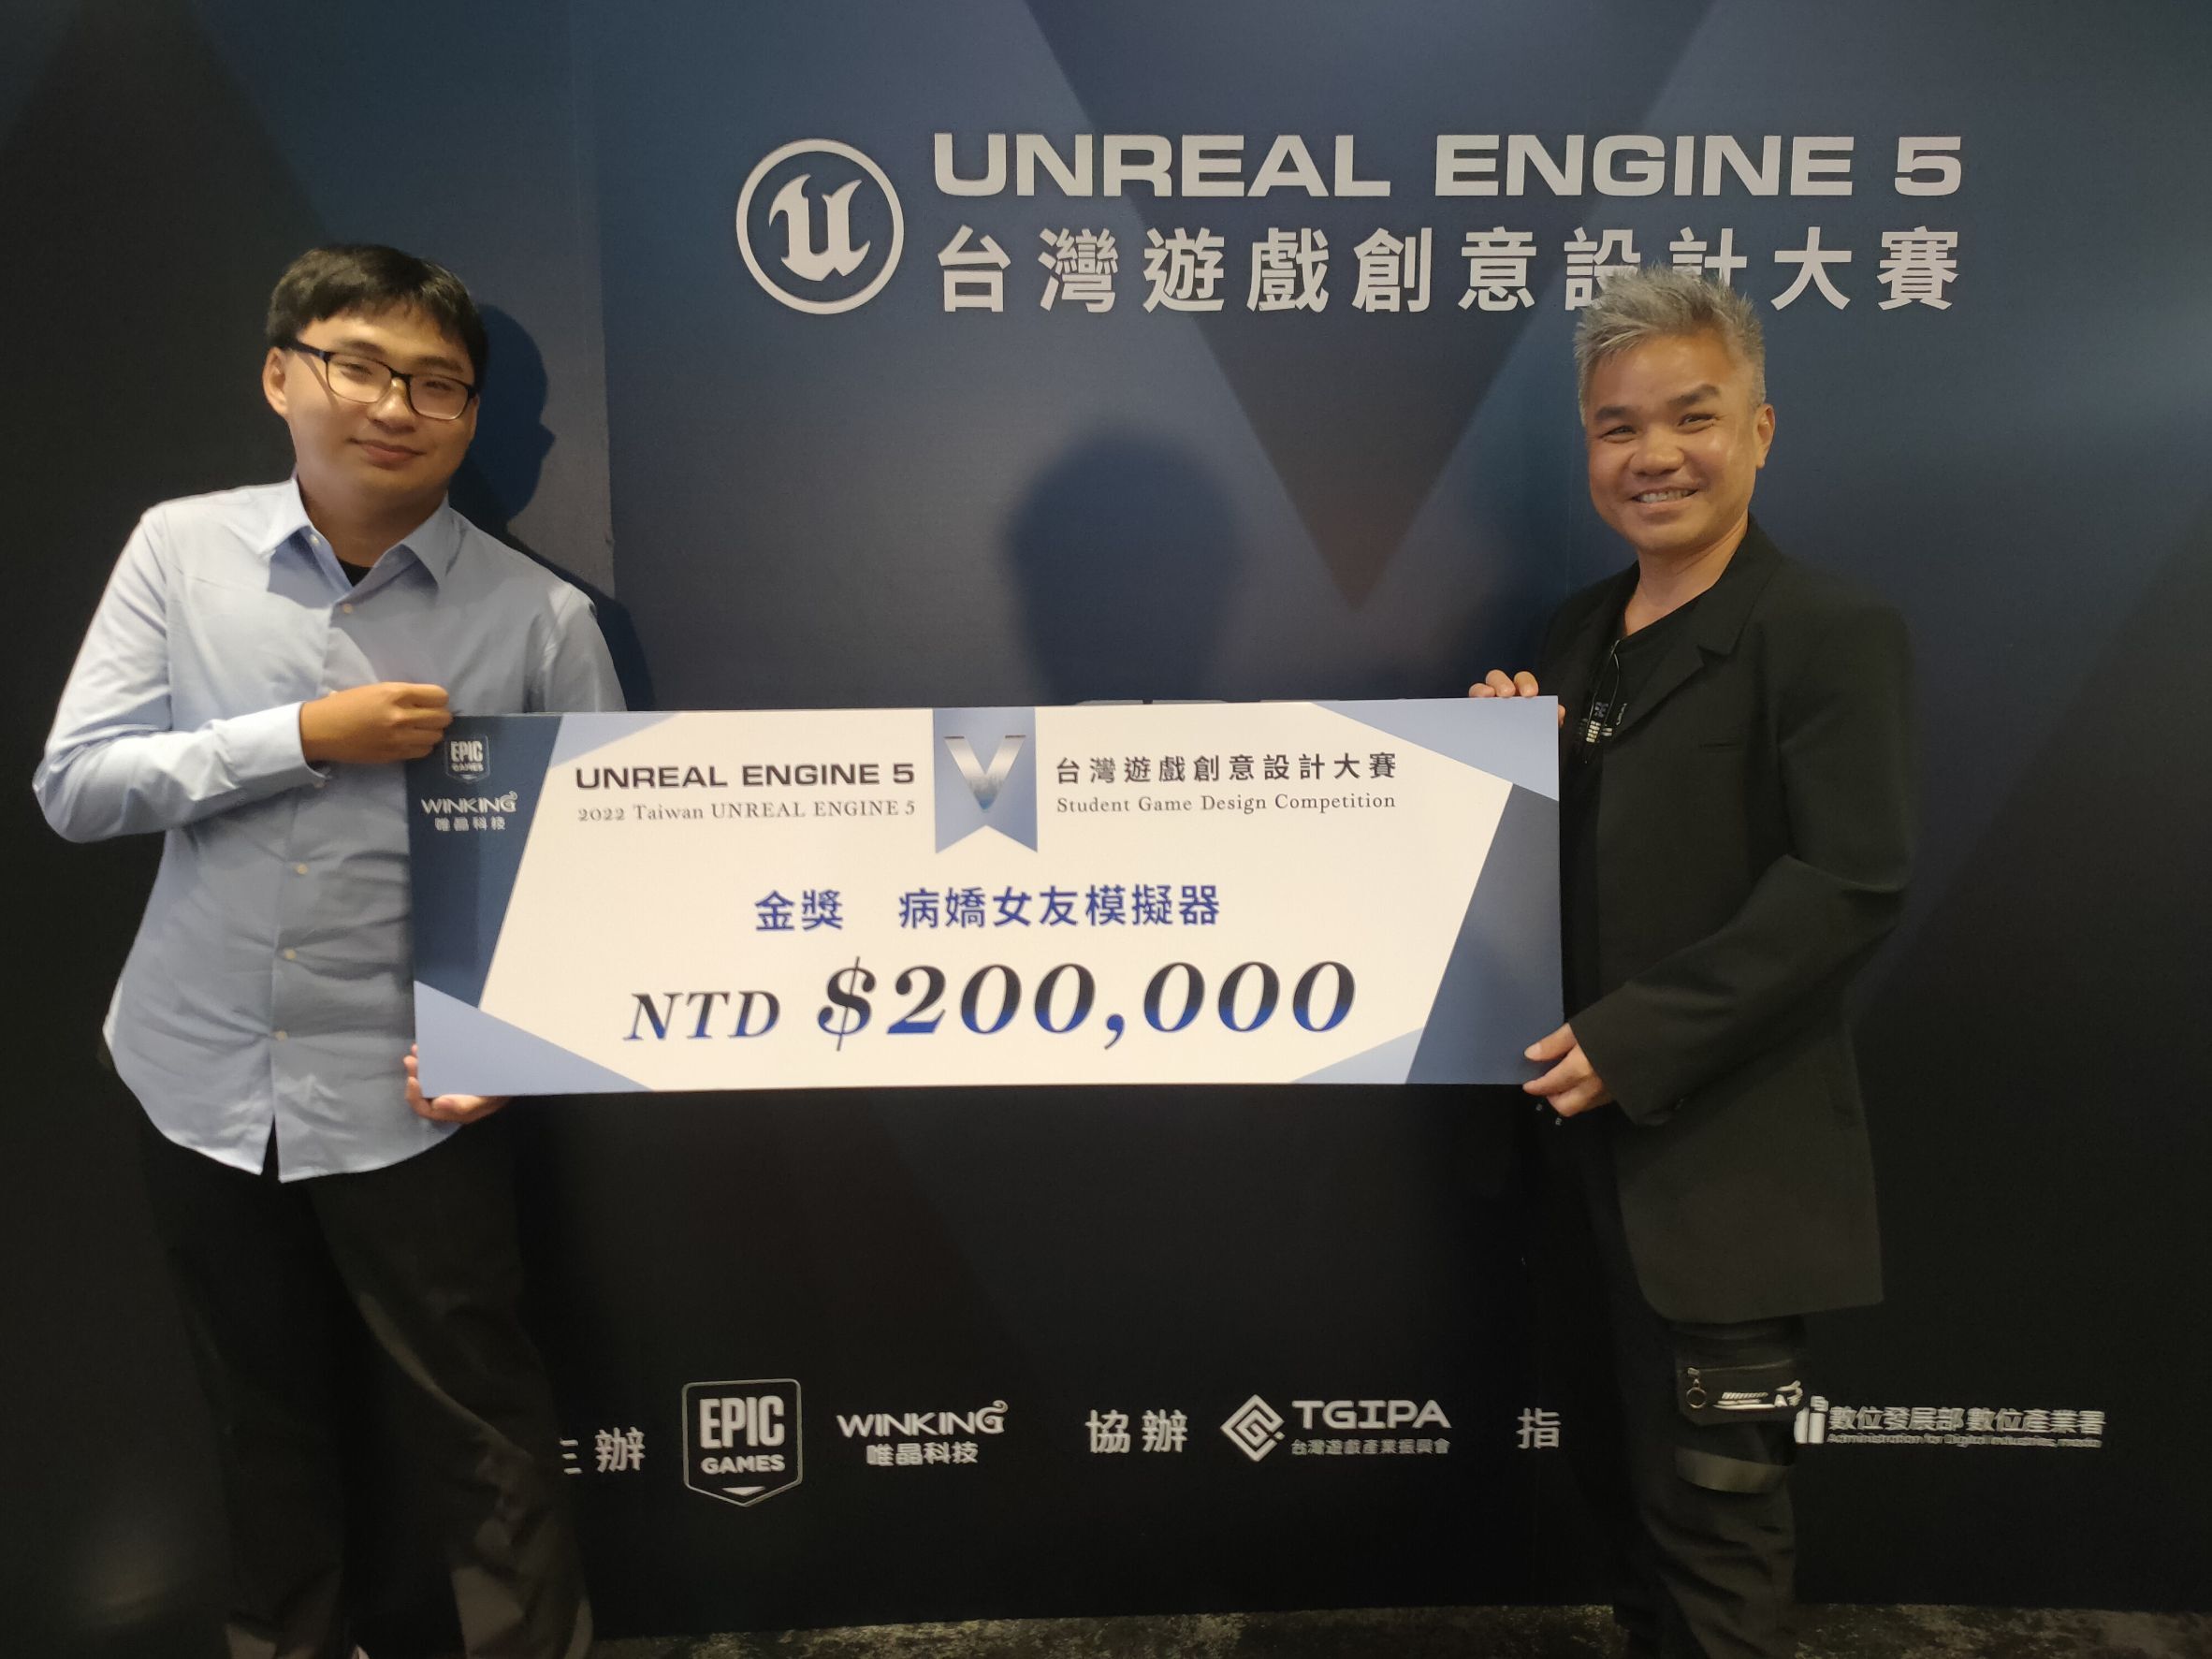 「Unreal Engine 5 台灣遊戲創意設計大賽」獲得金獎 / 銀獎